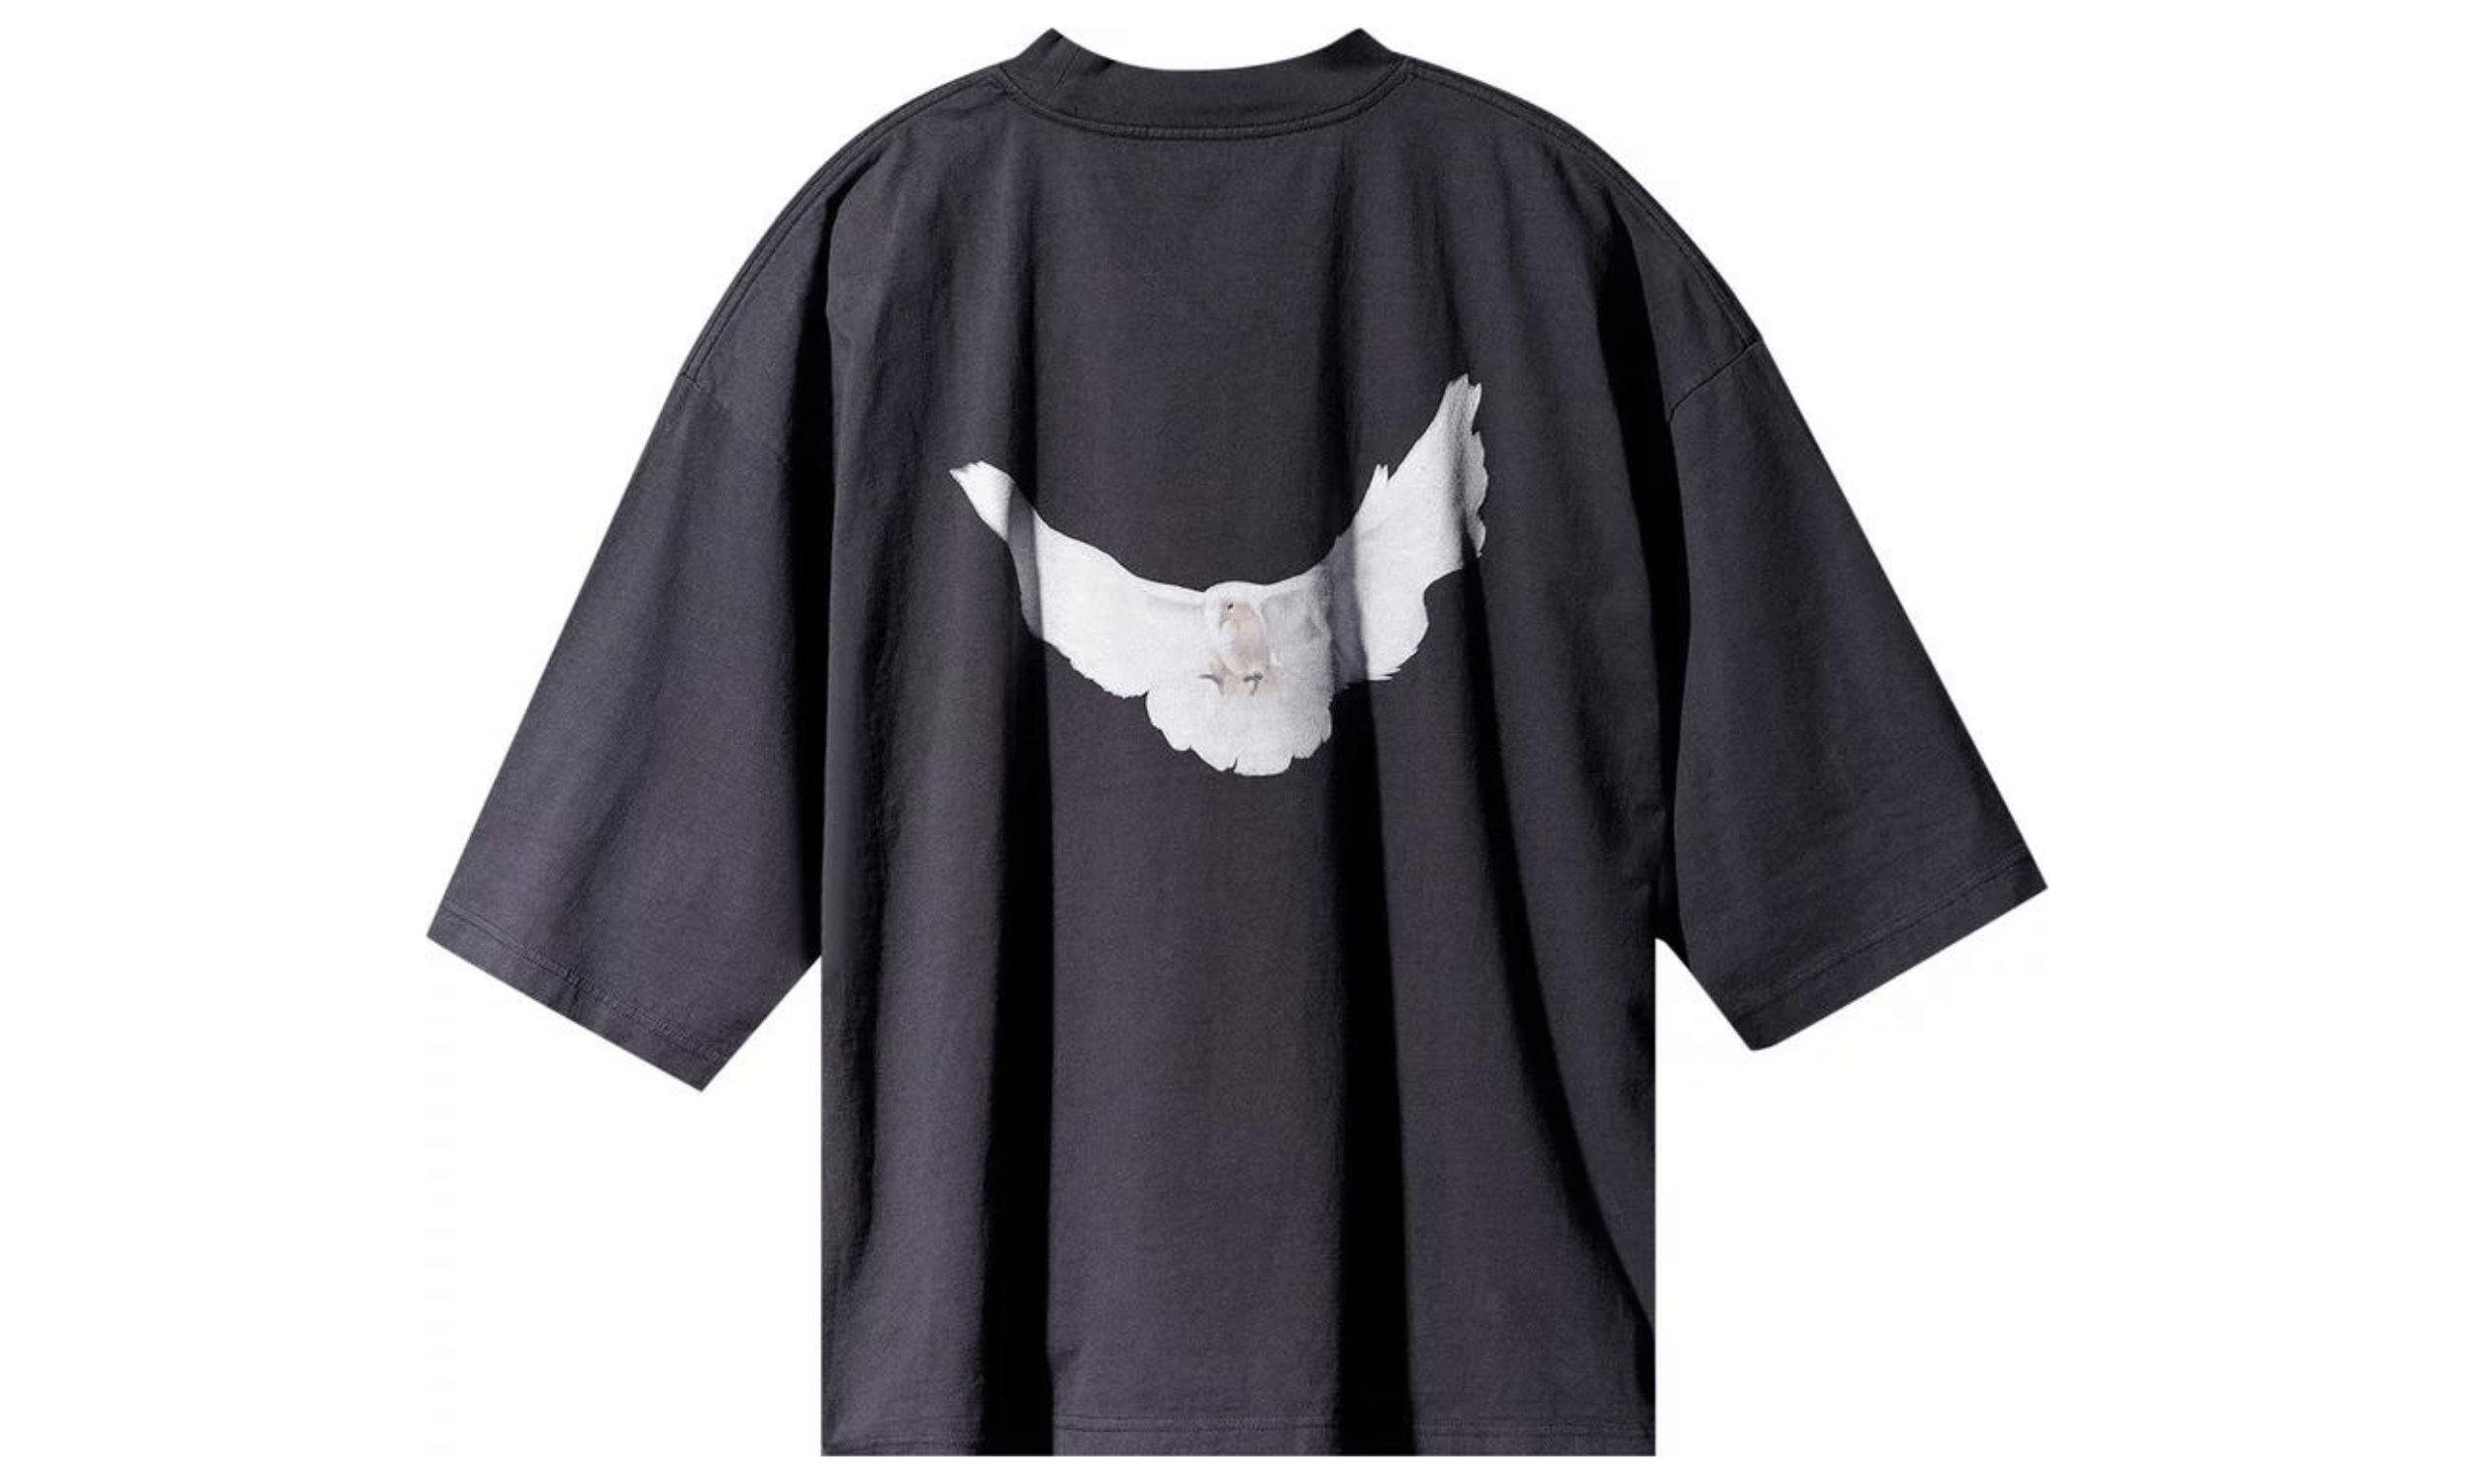 Yeezy Gap Engineered by Balenciaga Dove 3/4 Sleeve Tee Black - Kicksite-4712860220000